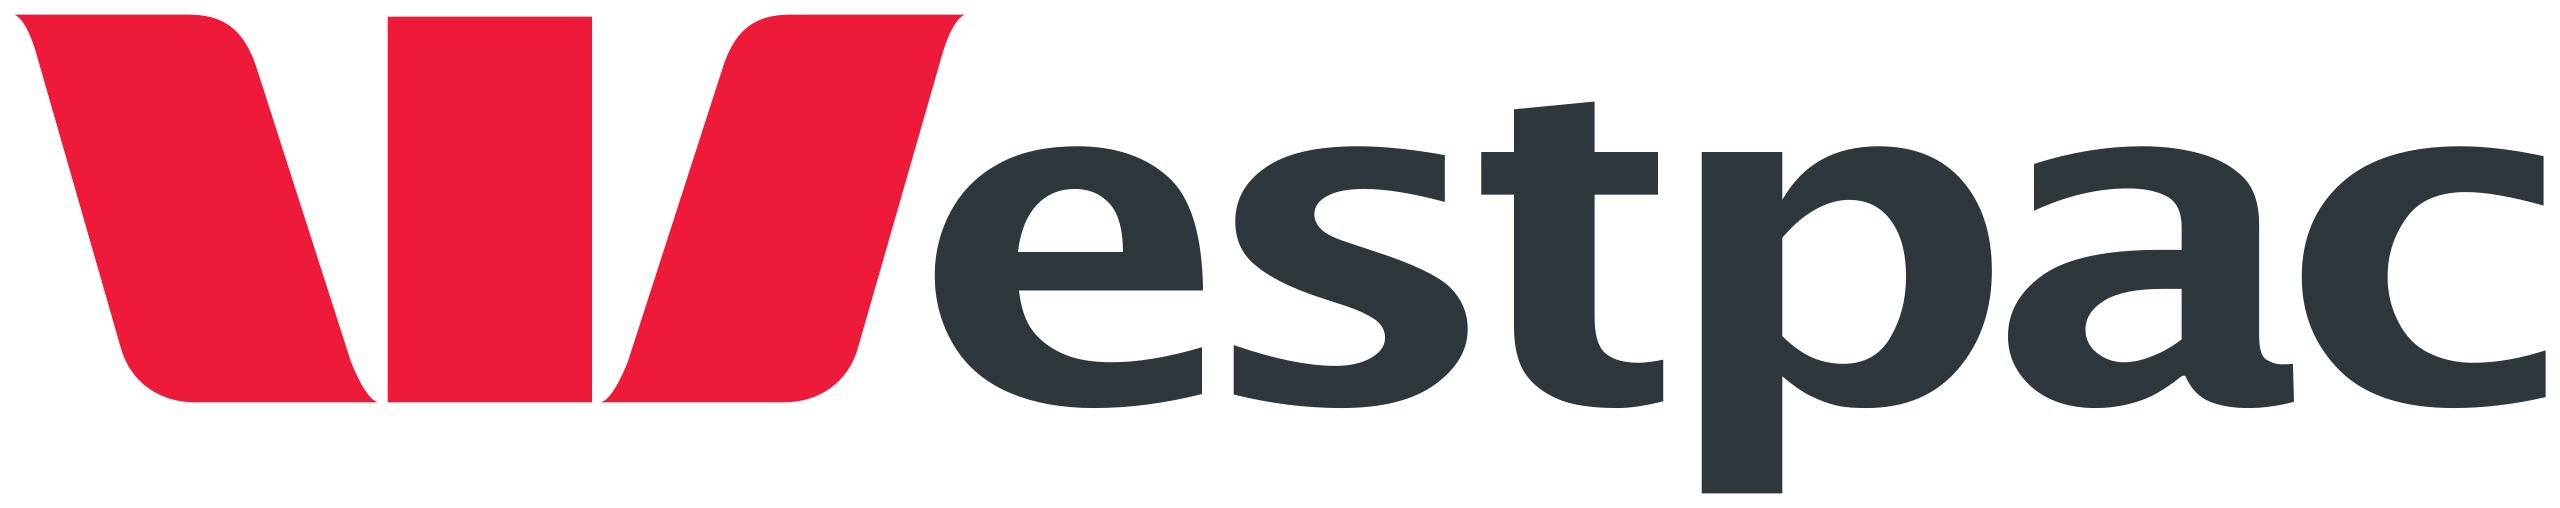 Westpac_logo